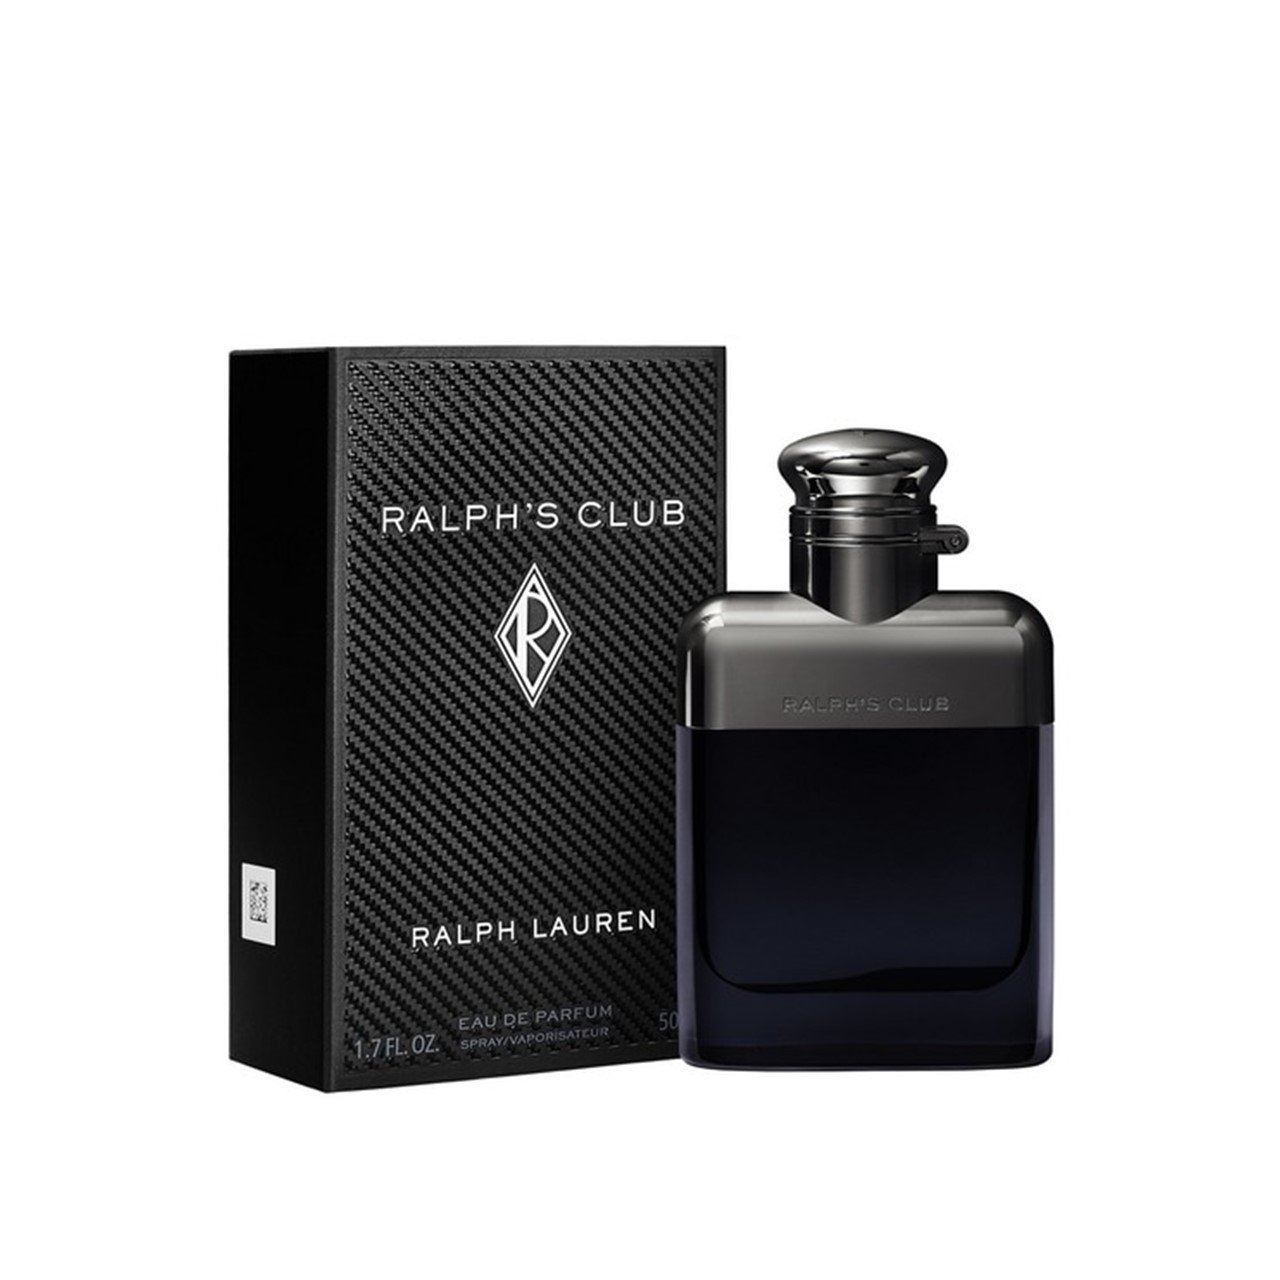 Ralph Lauren Ralph's Club Eau de Parfum For Men 50ml